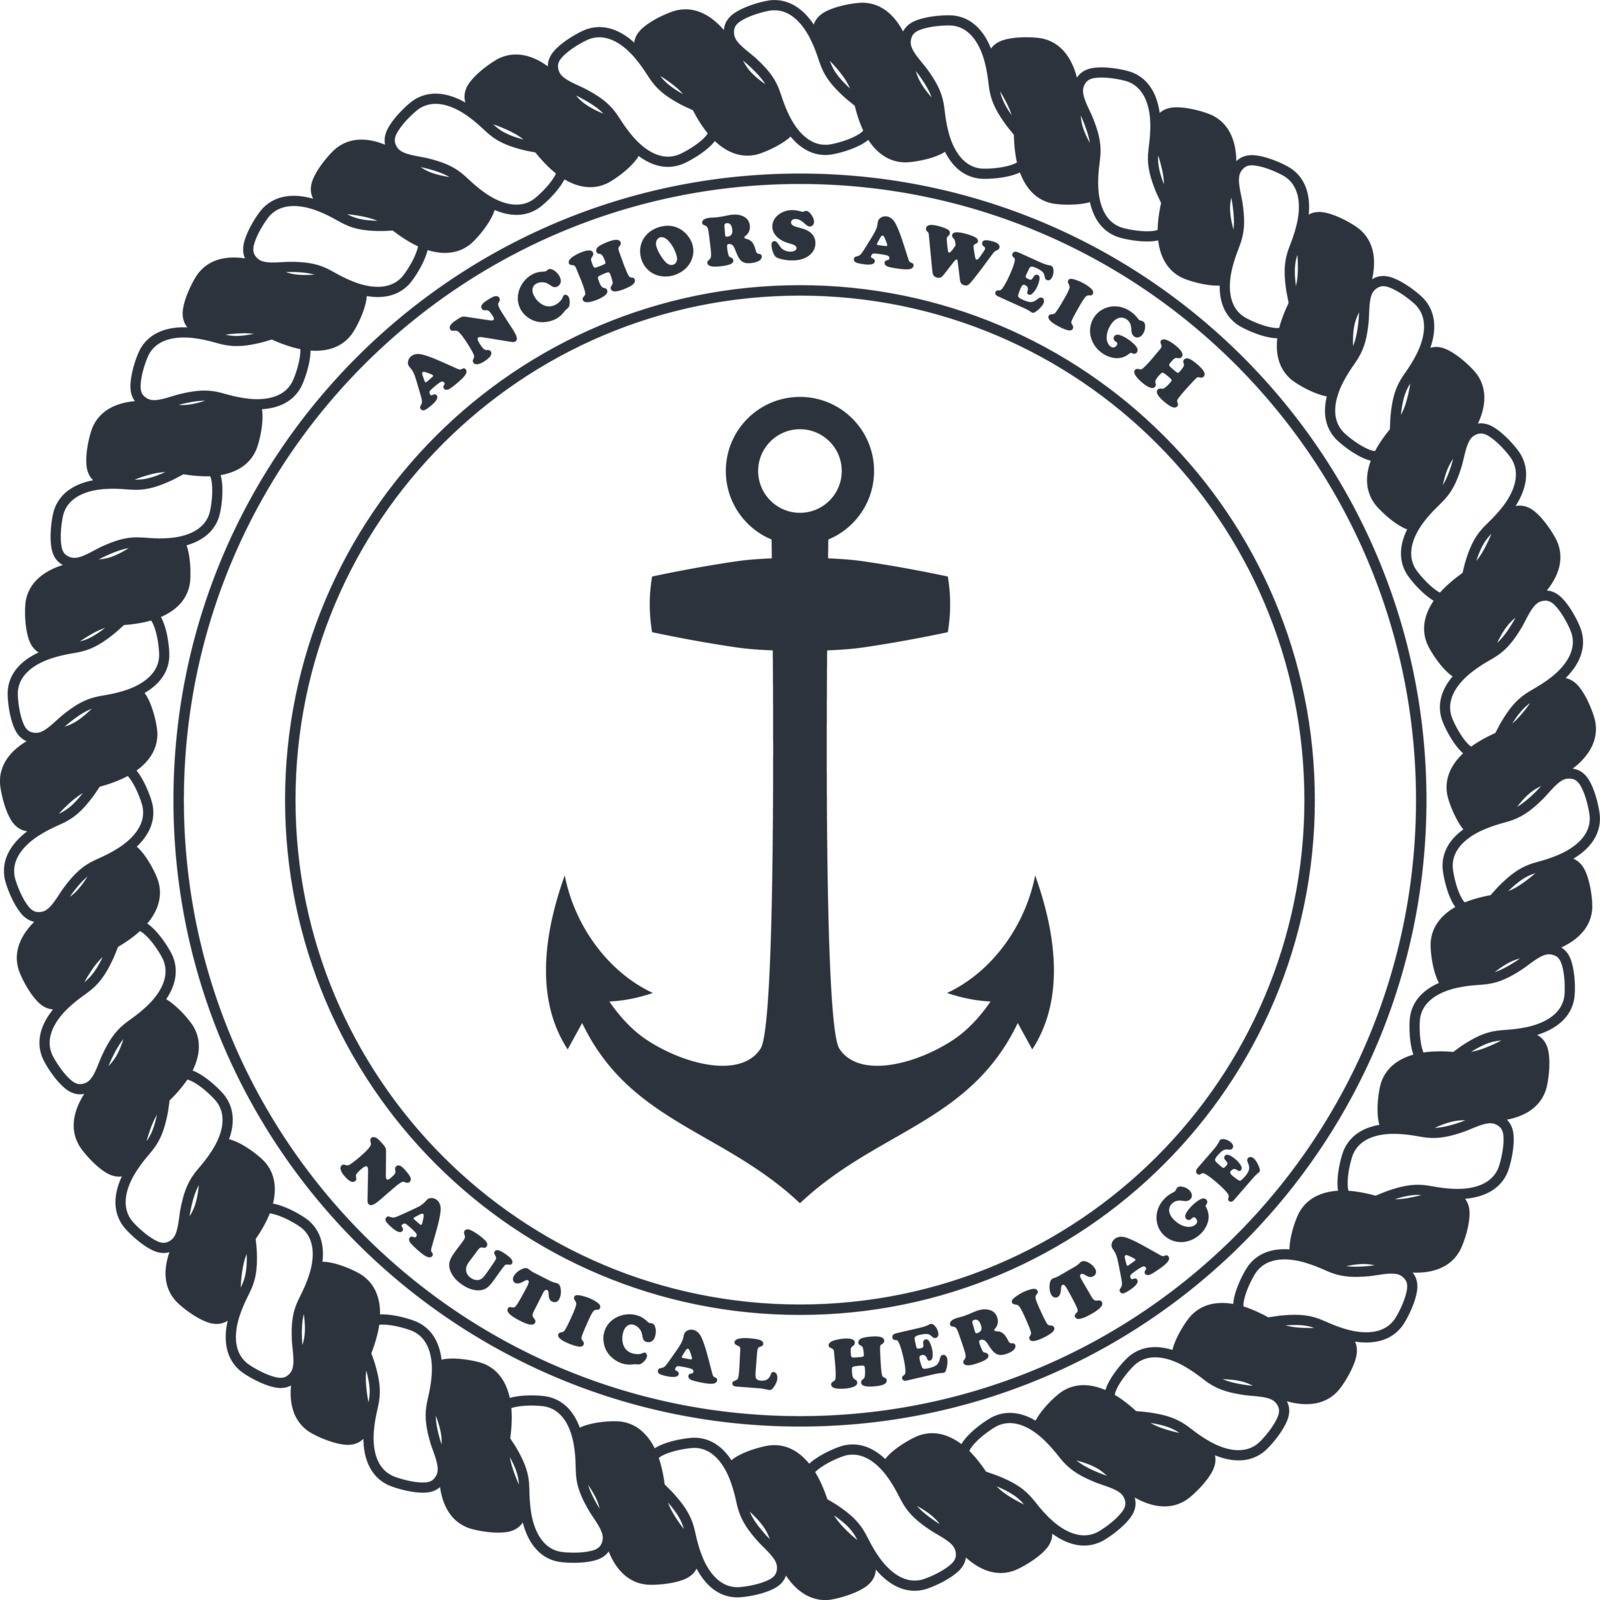 sailor anchor ocean nautical theme vector art illustration